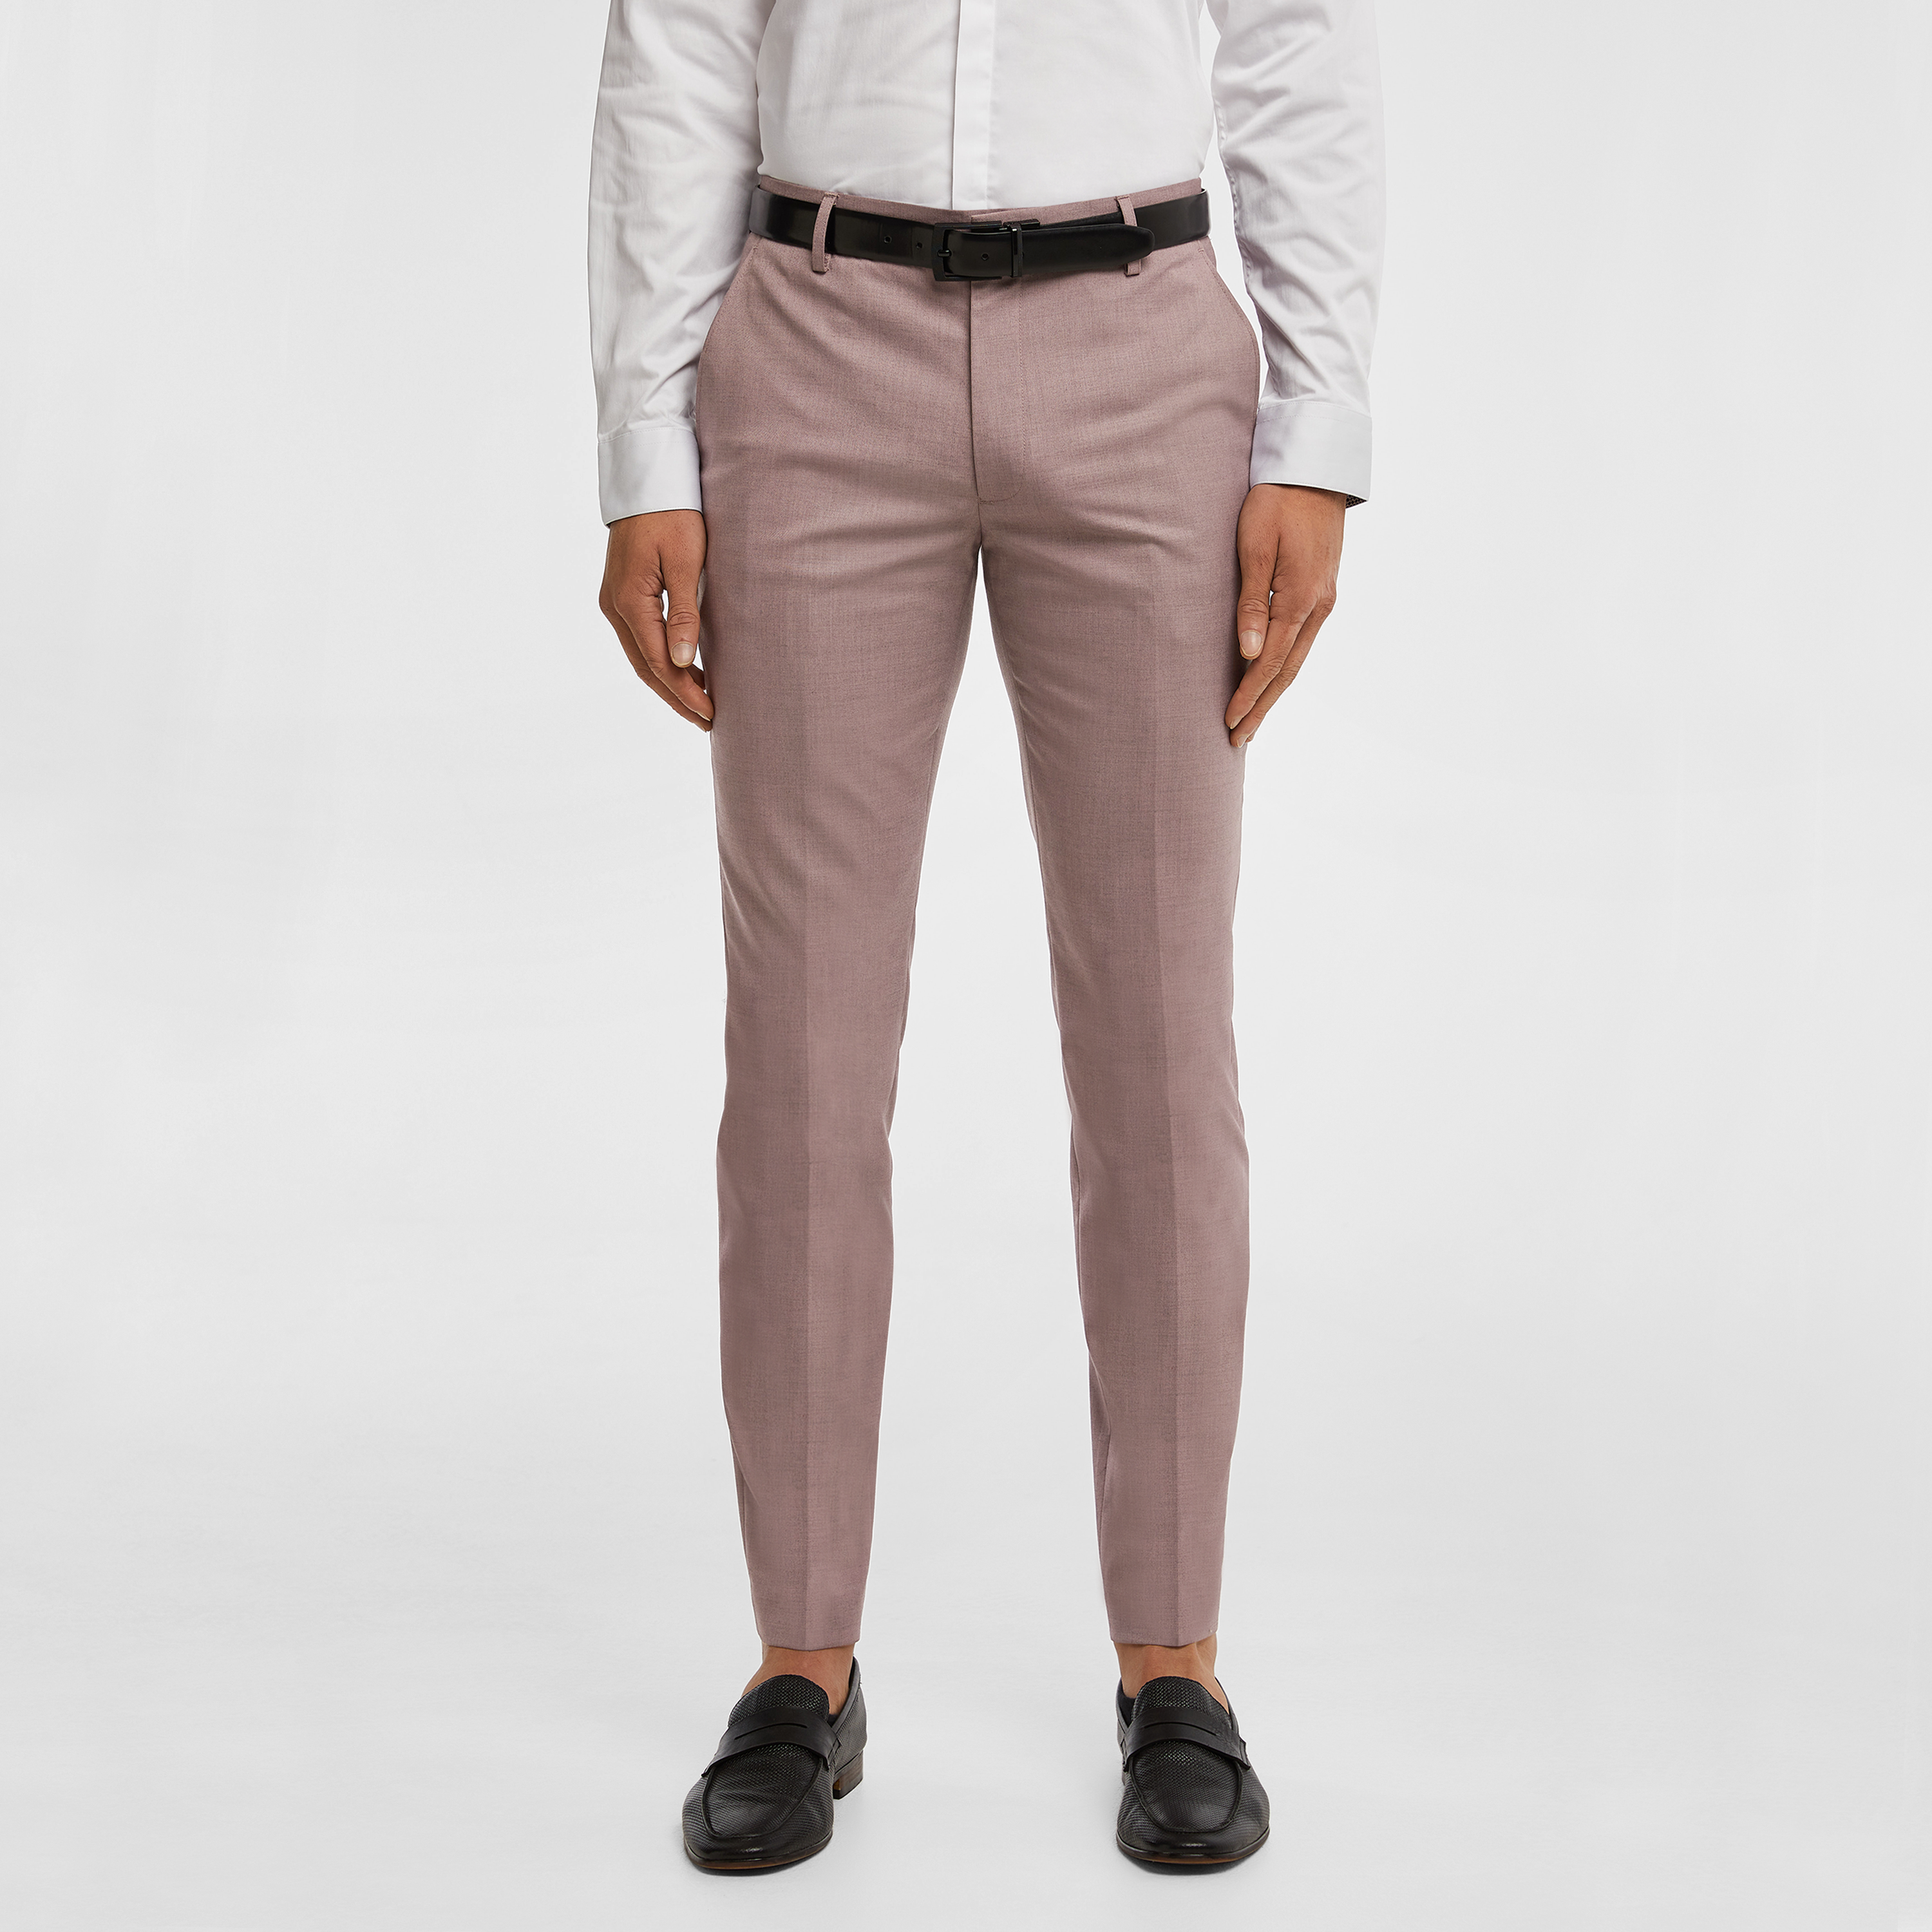 ALSLIAO Mens Slim Fit Pants Stretch Casual Work Gentleman Business Skinny  Pants Trousers Gray M - Walmart.com